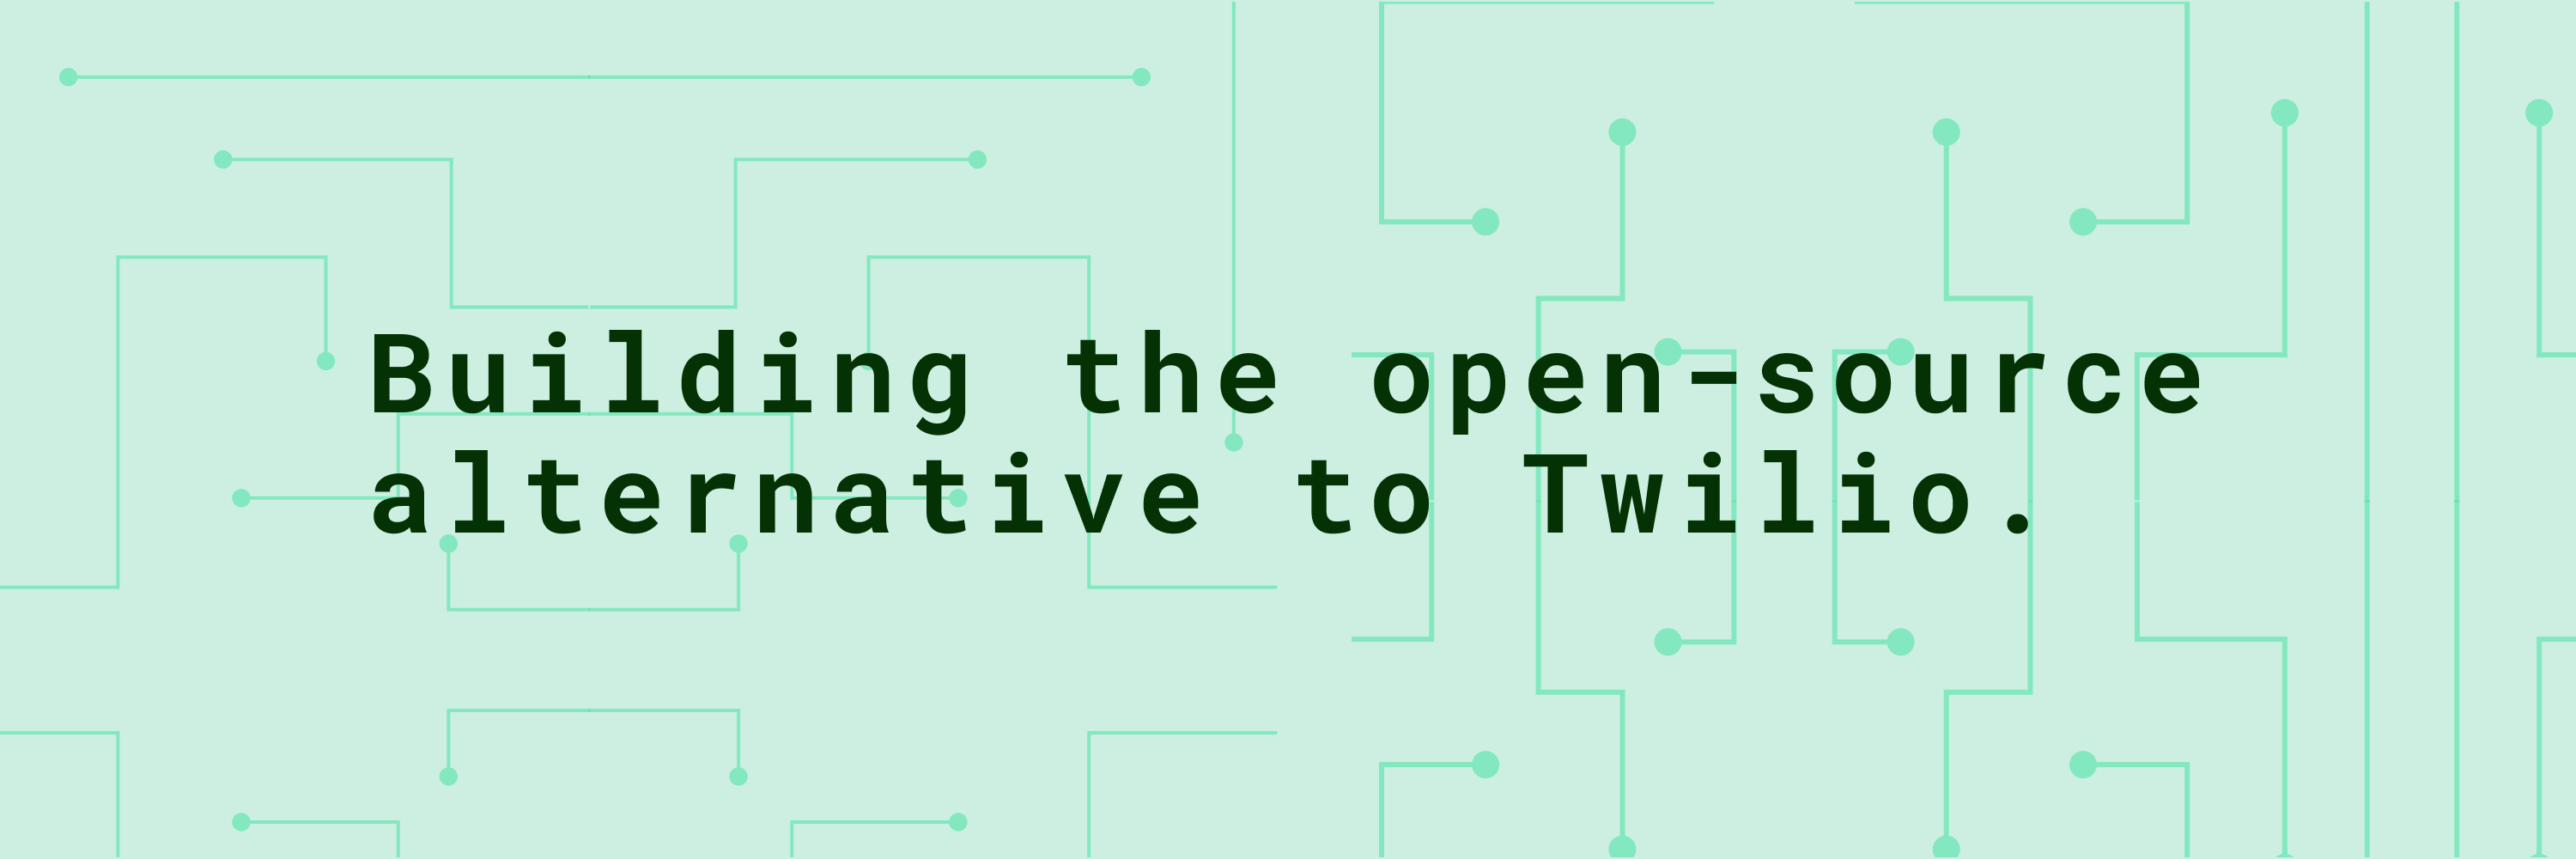 Building the Open Source alternative of Twilio